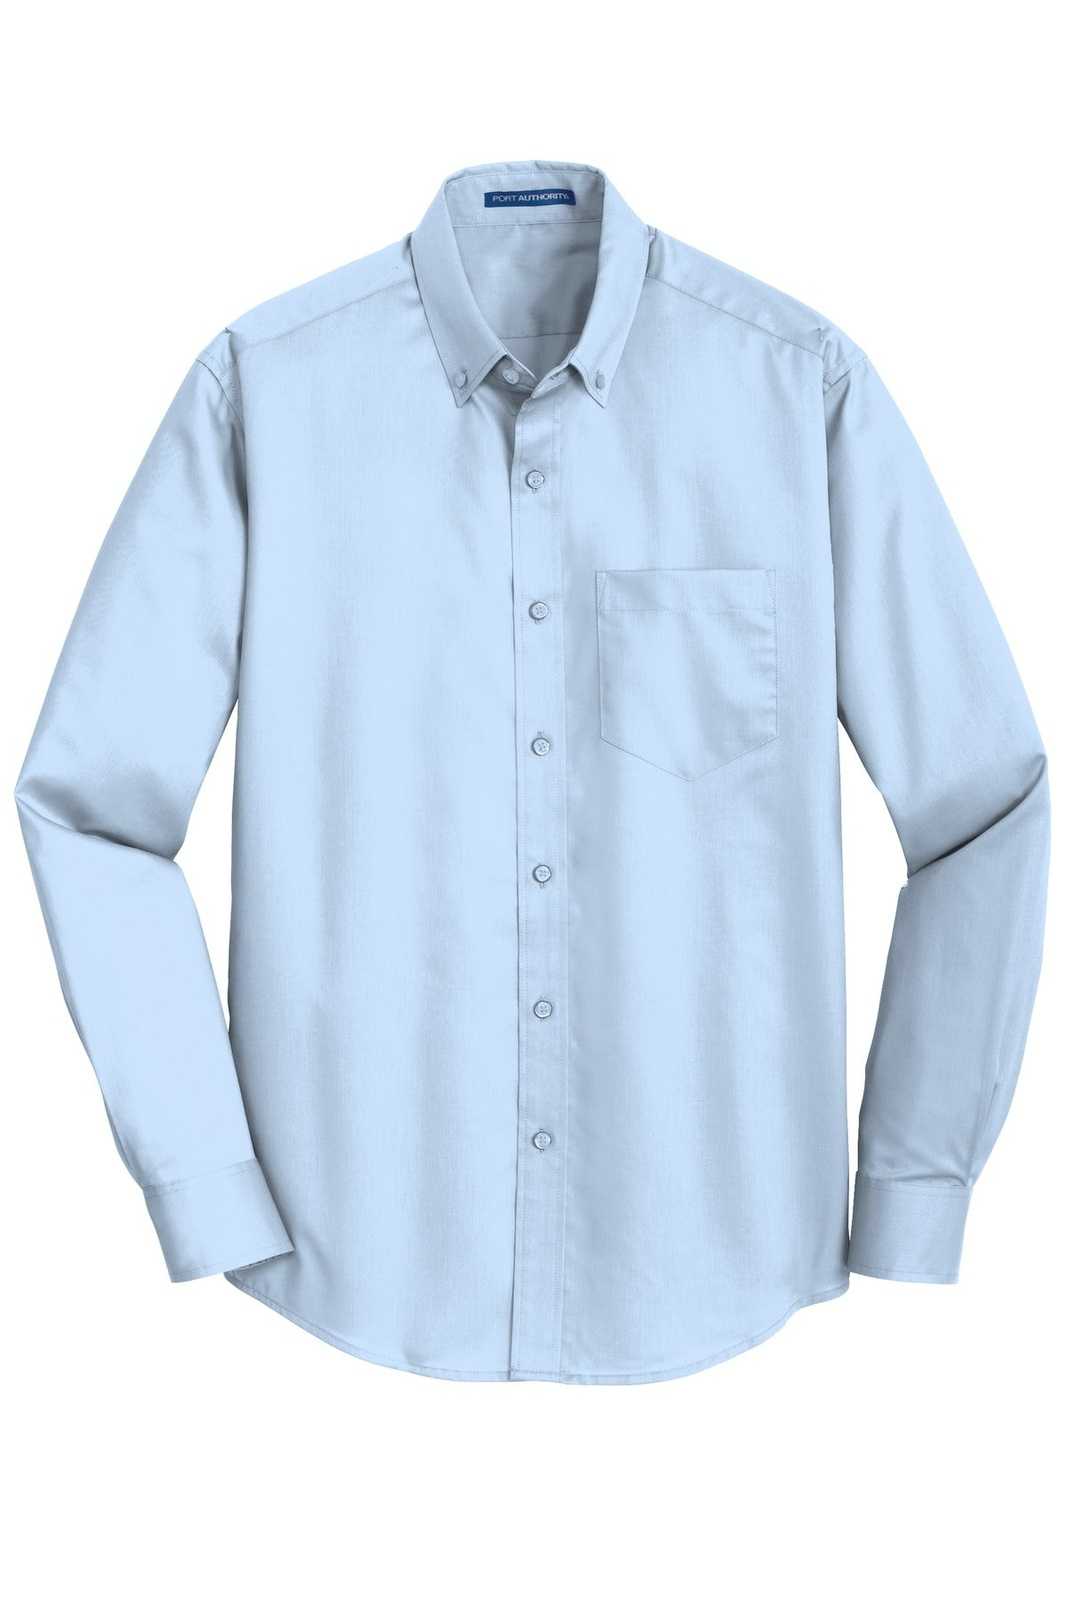 Port Authority S663 Superpro Twill Shirt - Cloud Blue - HIT a Double - 5